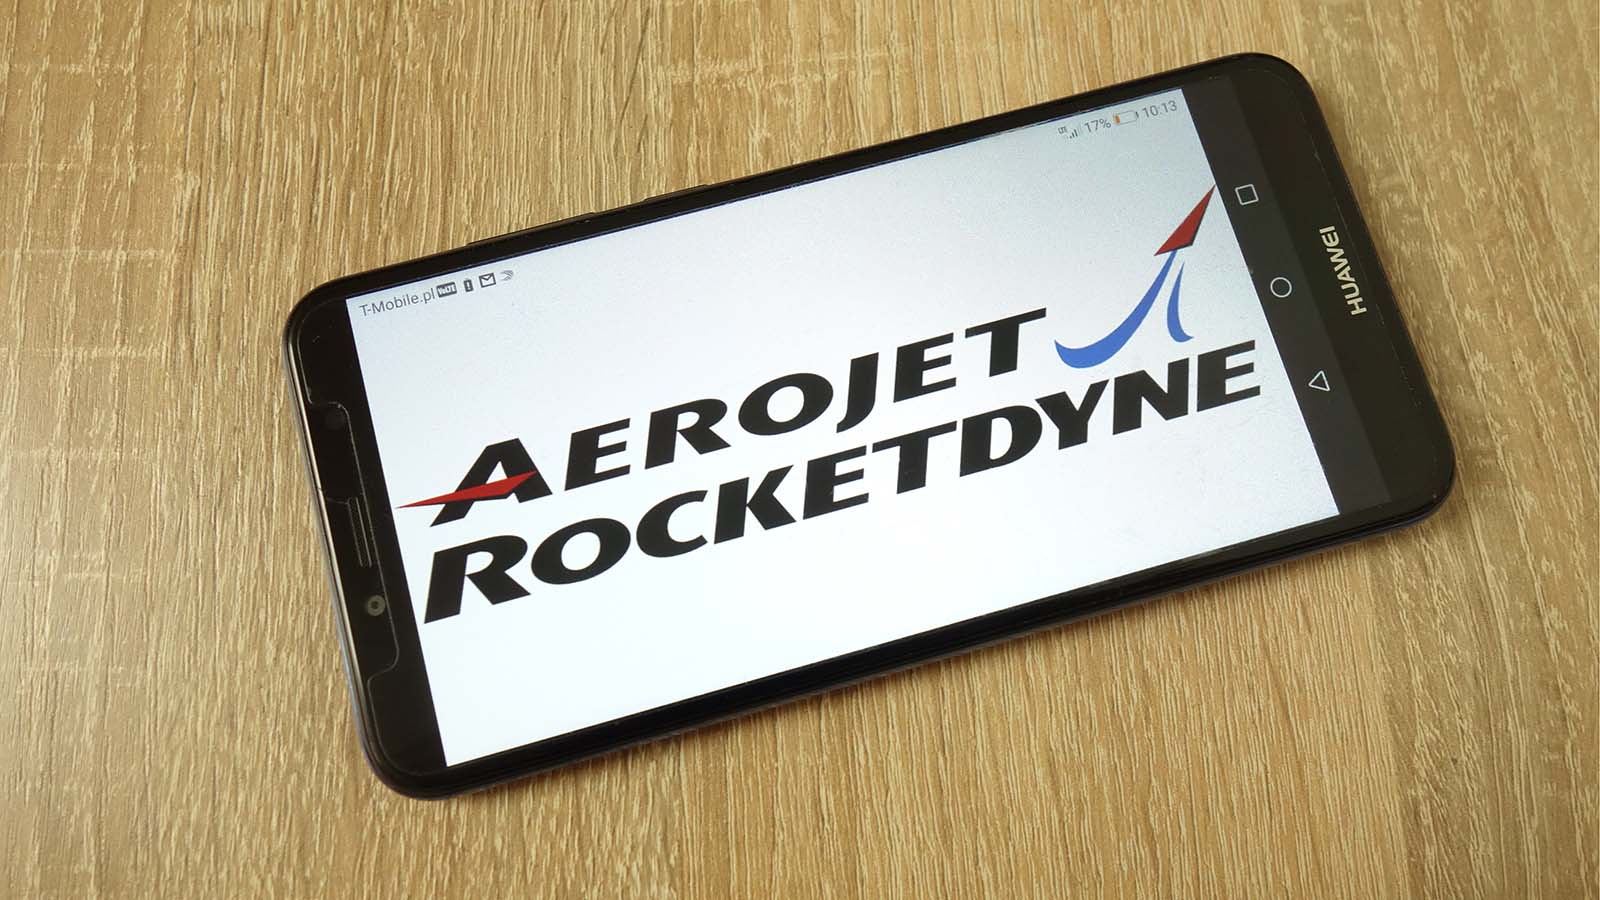 AJRD Stock. Aerojet Rocketdyne logo on a smartphone.